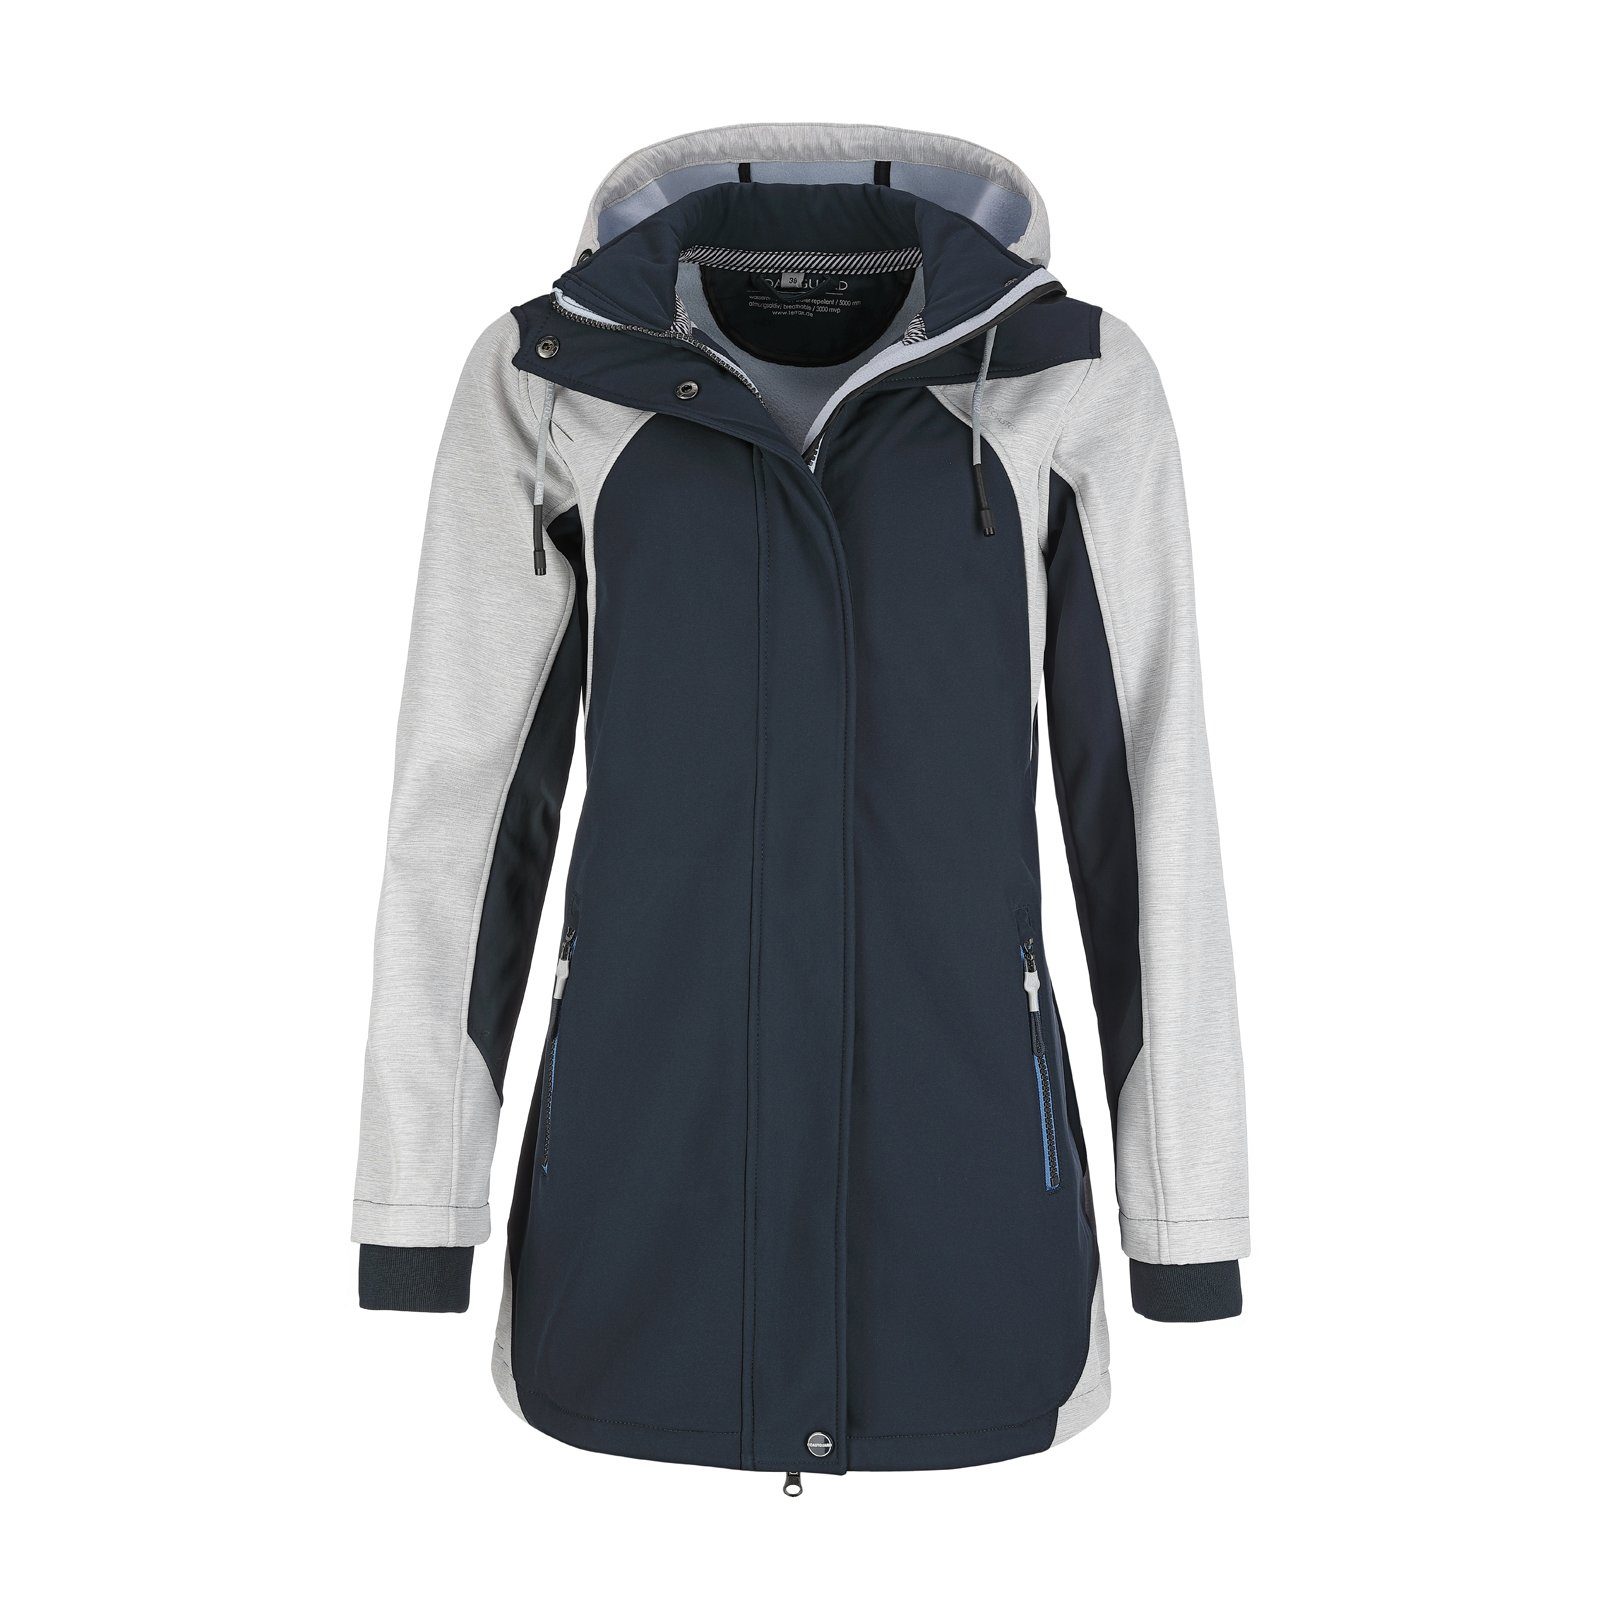 Coastguard Softshelljacke Damen Jacke zweifarbig – Outdoor-Jacke abnehmbarer Kapuze atmungsaktiv dunkelblau/hellgrau | Übergangsjacken